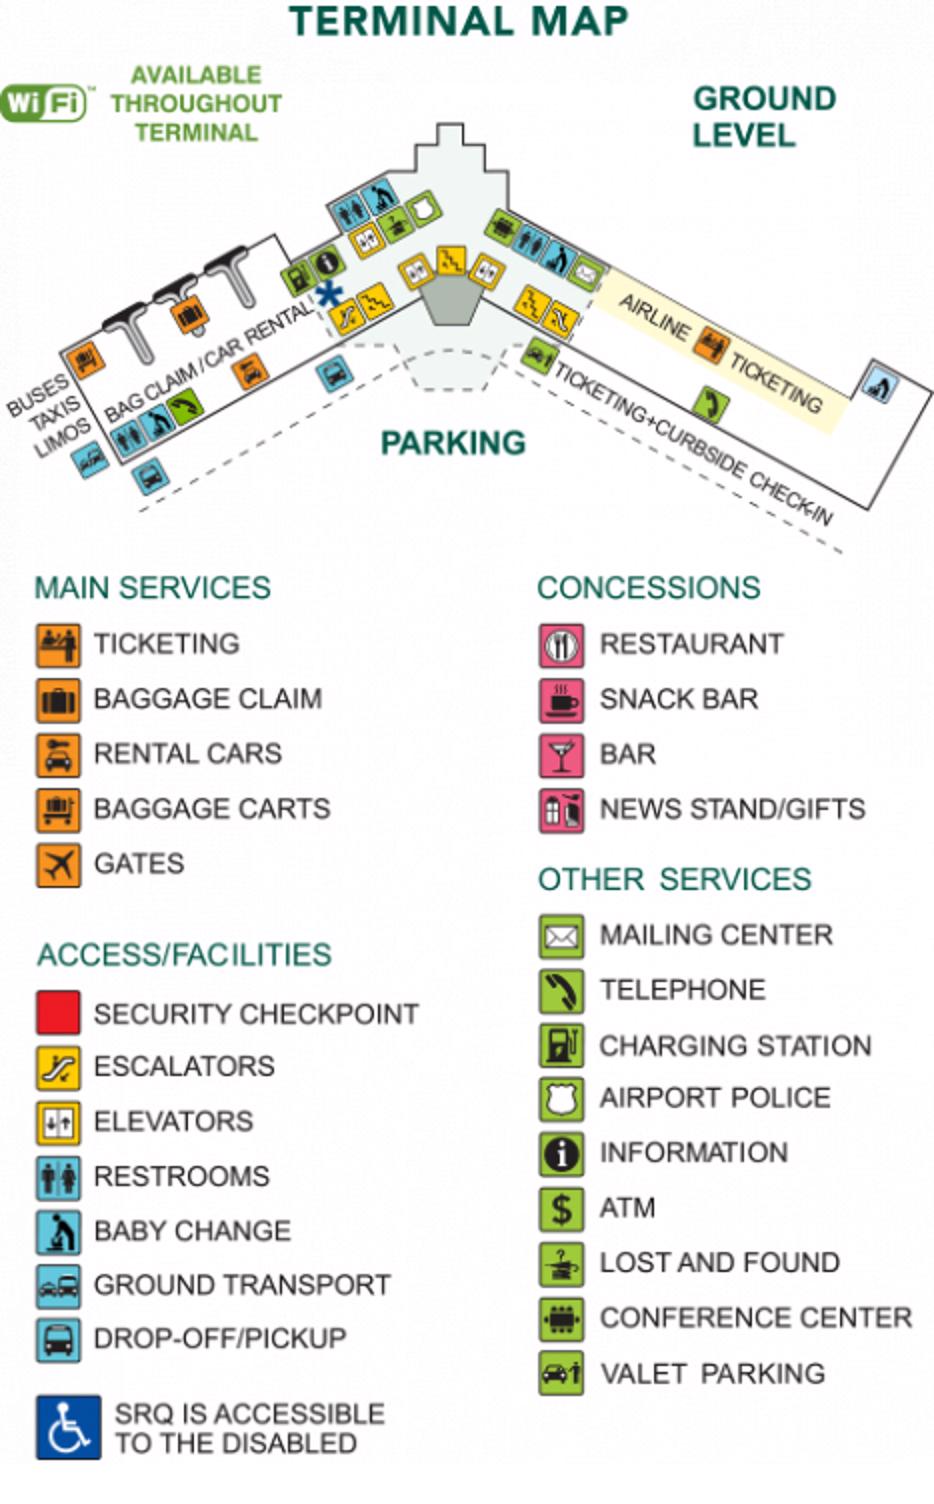 sarasota-bradenton airport map (srq) - printable terminal